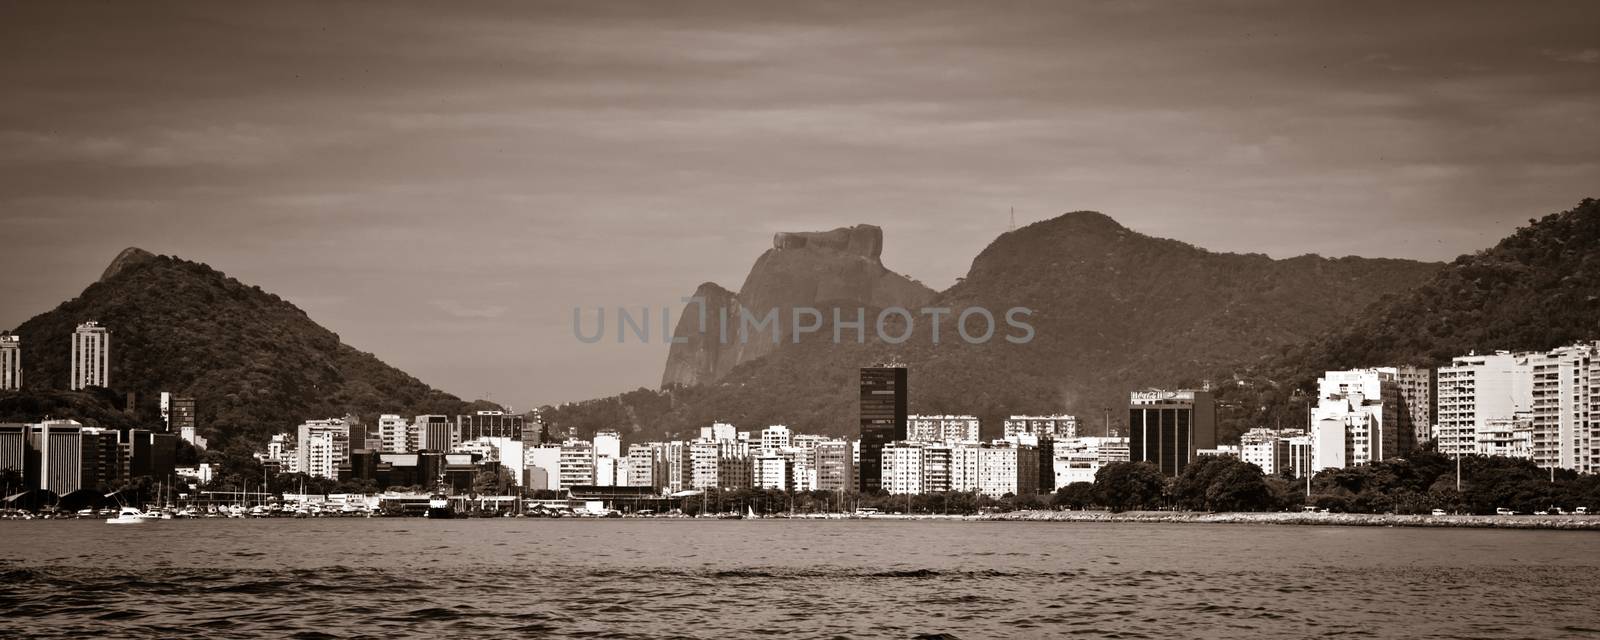 Rio de Janeiro landscape by CelsoDiniz